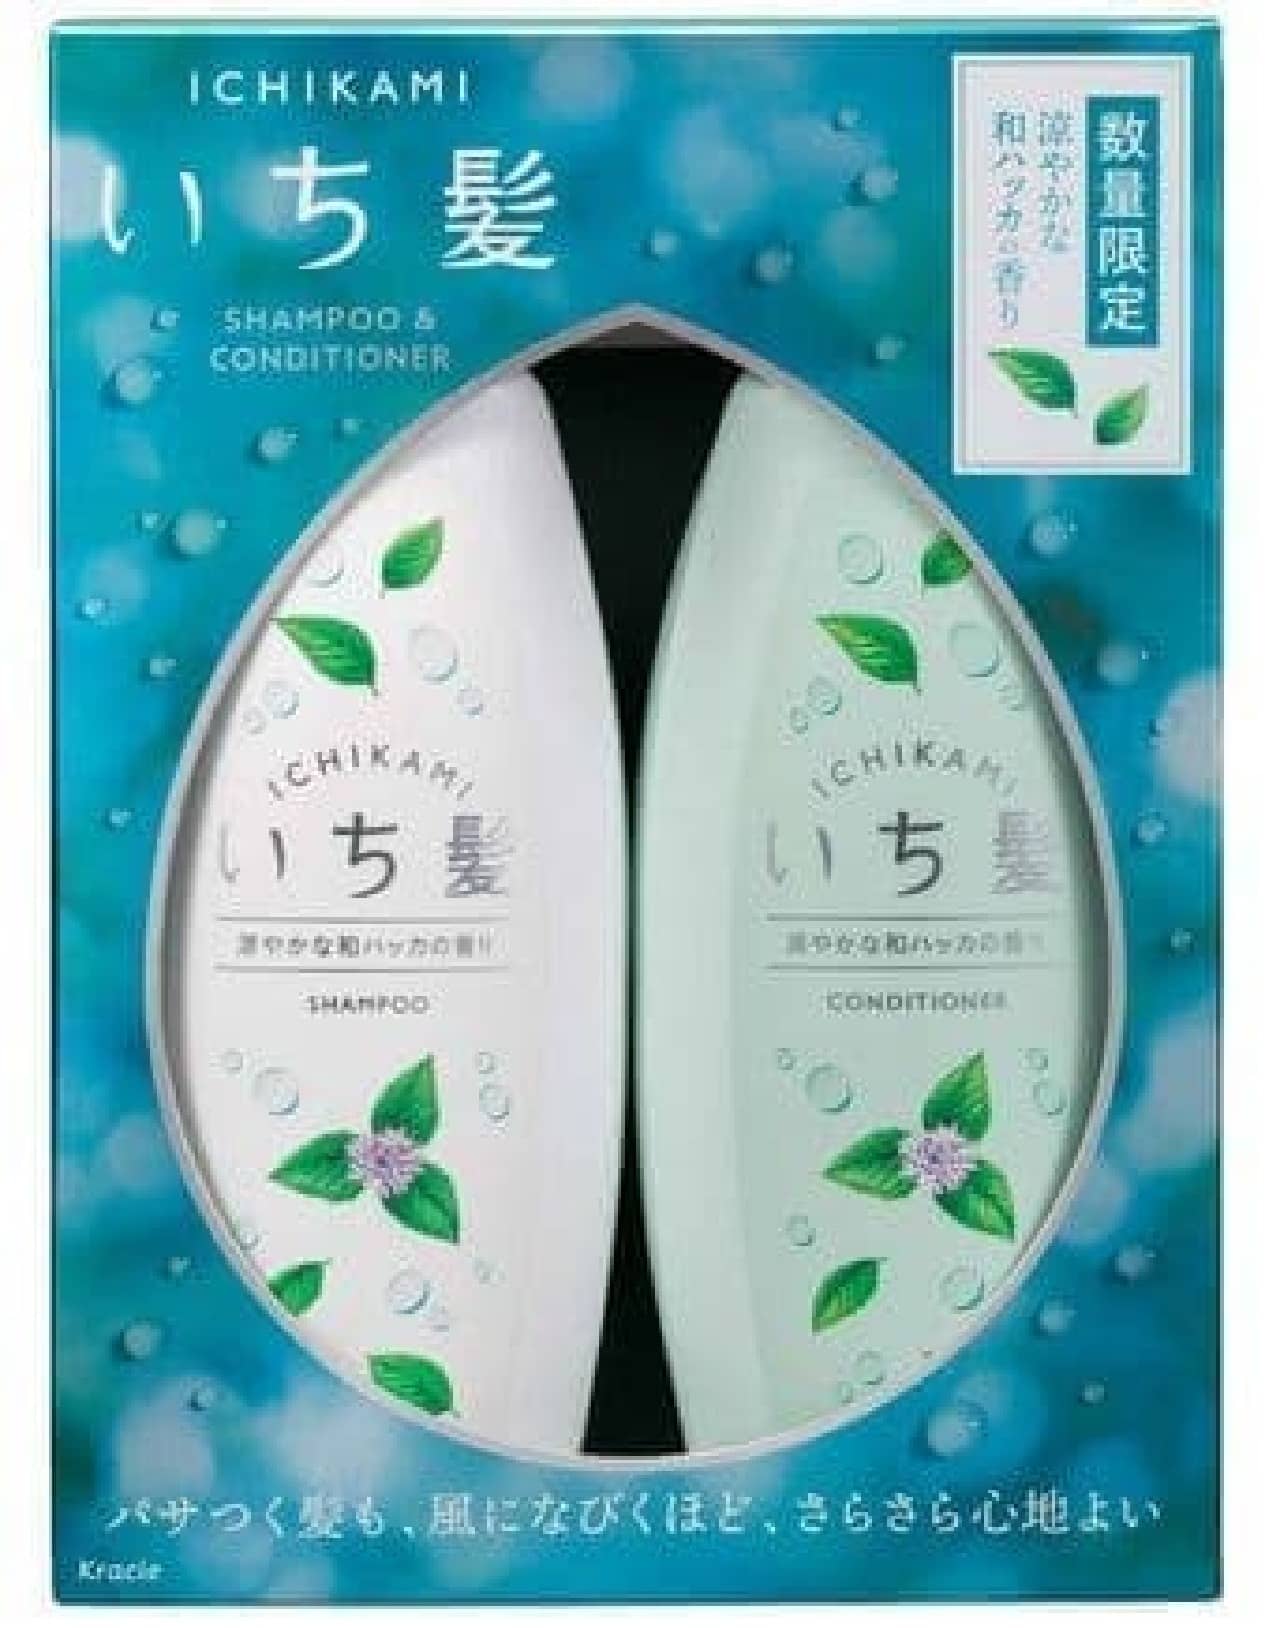 Ichi Hair Shampoo & Conditioner (Scent of Japanese Mentha)